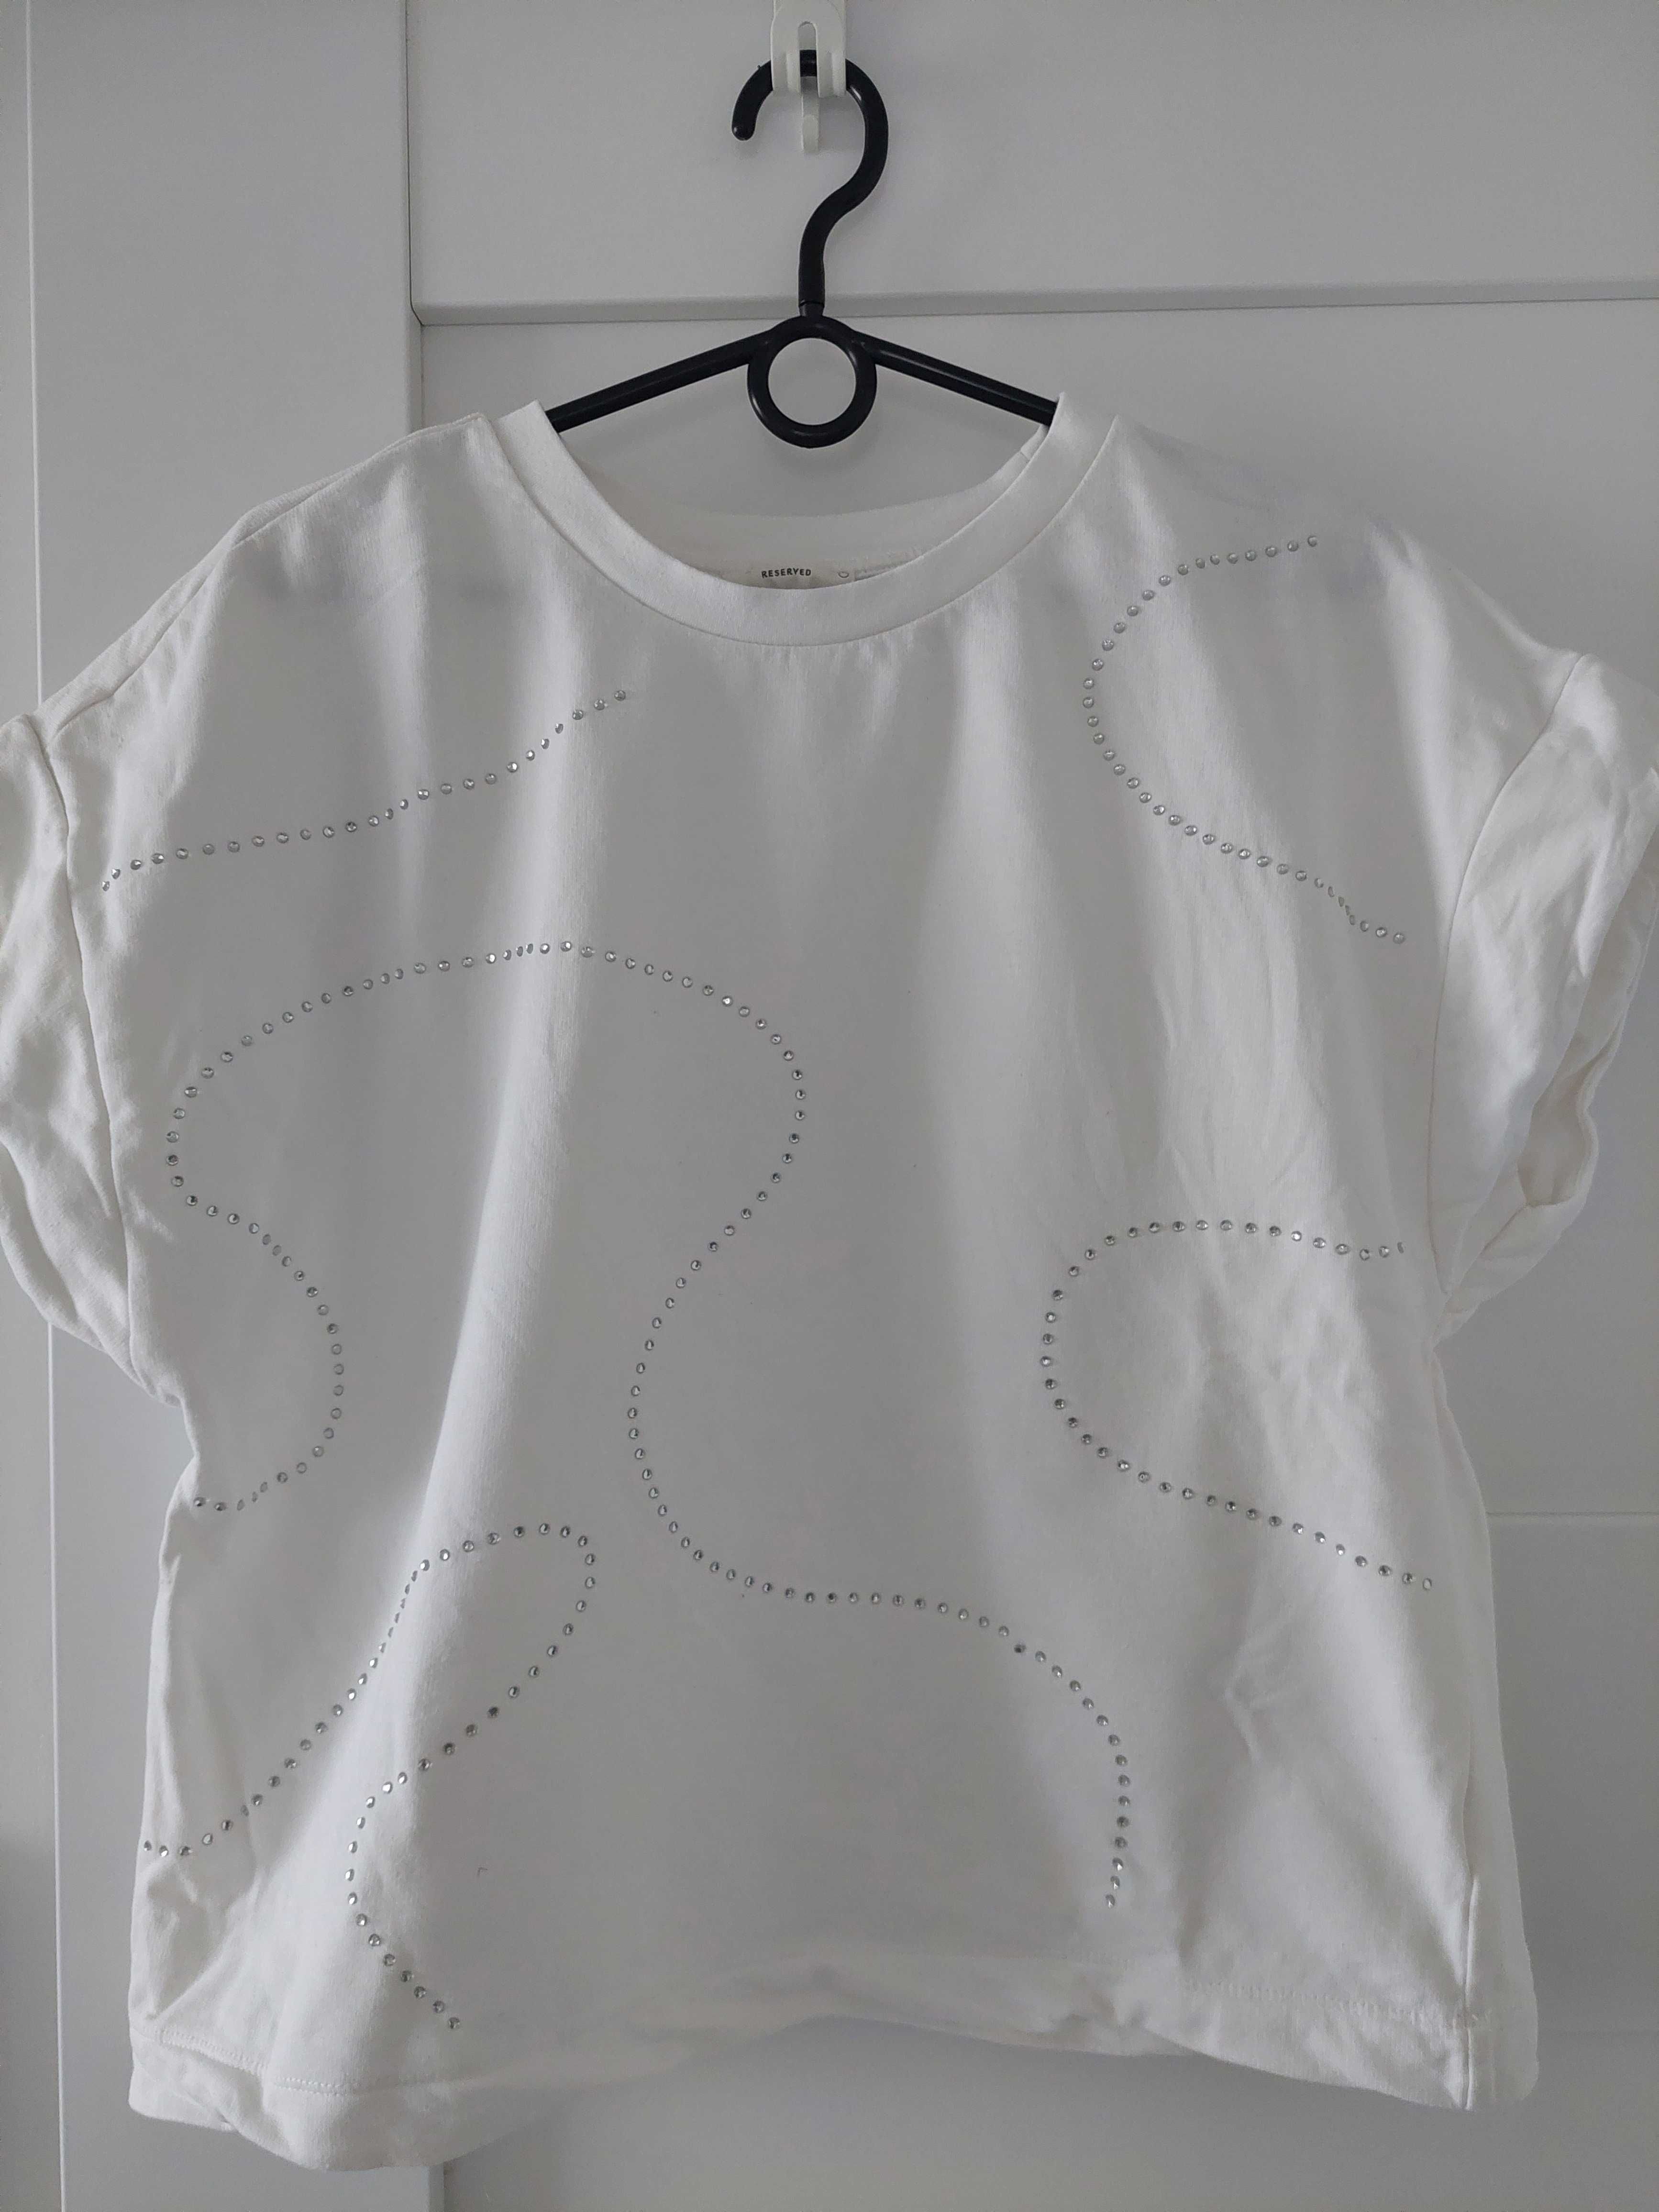 T shirt damski/styl kimono/Reserved/rozmiar M